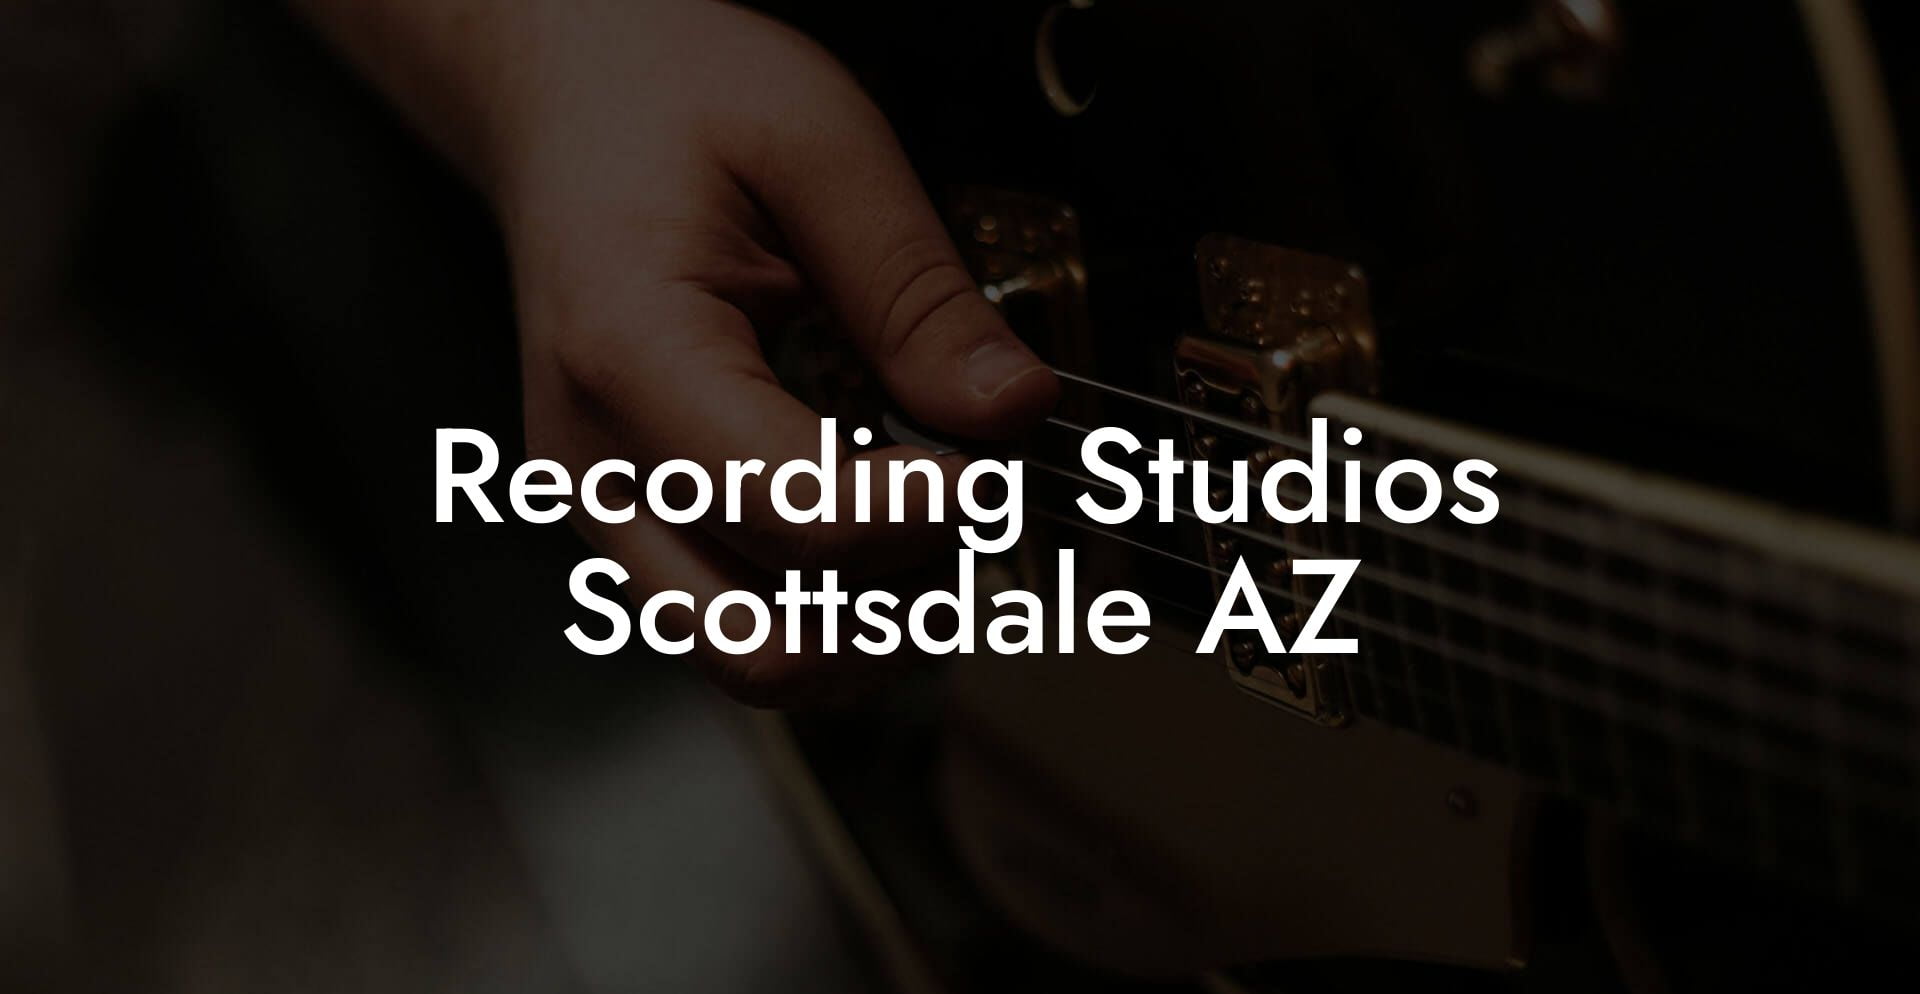 Recording Studios Scottsdale AZ